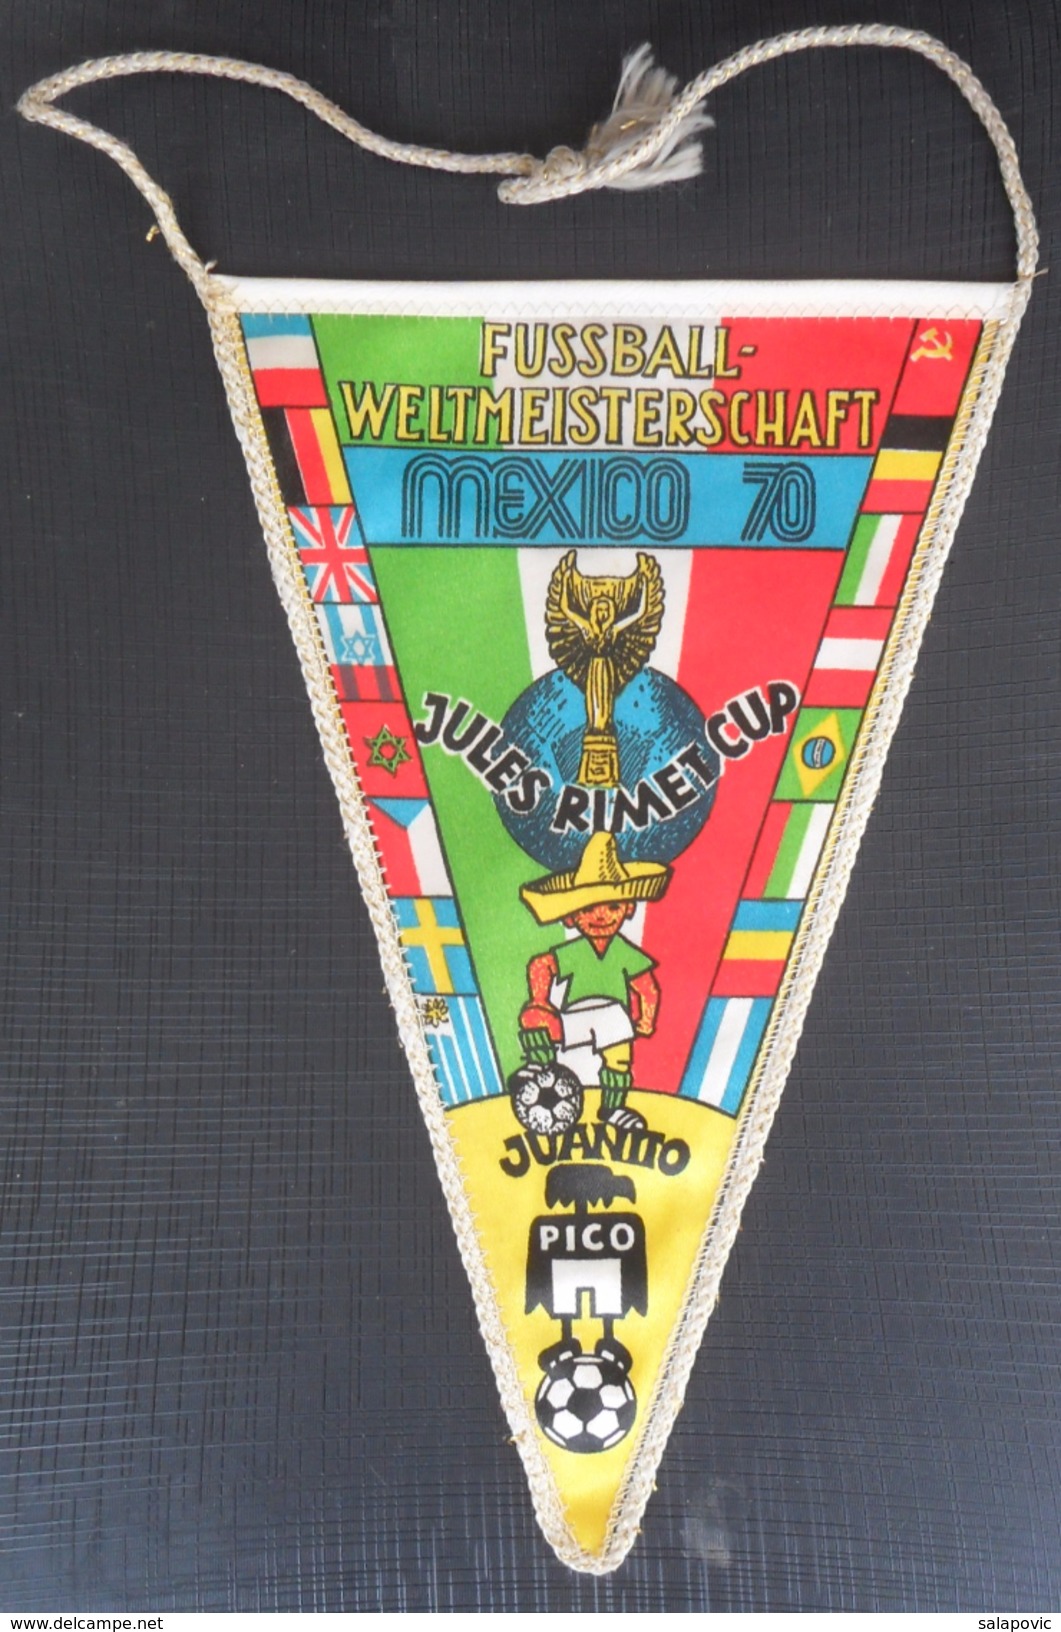 Fußball-Weltmeisterschaft 1970 Mexico,  FIFA World Cup  FOOTBALL CLUB SOCCER / FUTBOL / CALCIO, OLD PENNANT, SPORTS FLAG - Abbigliamento, Souvenirs & Varie